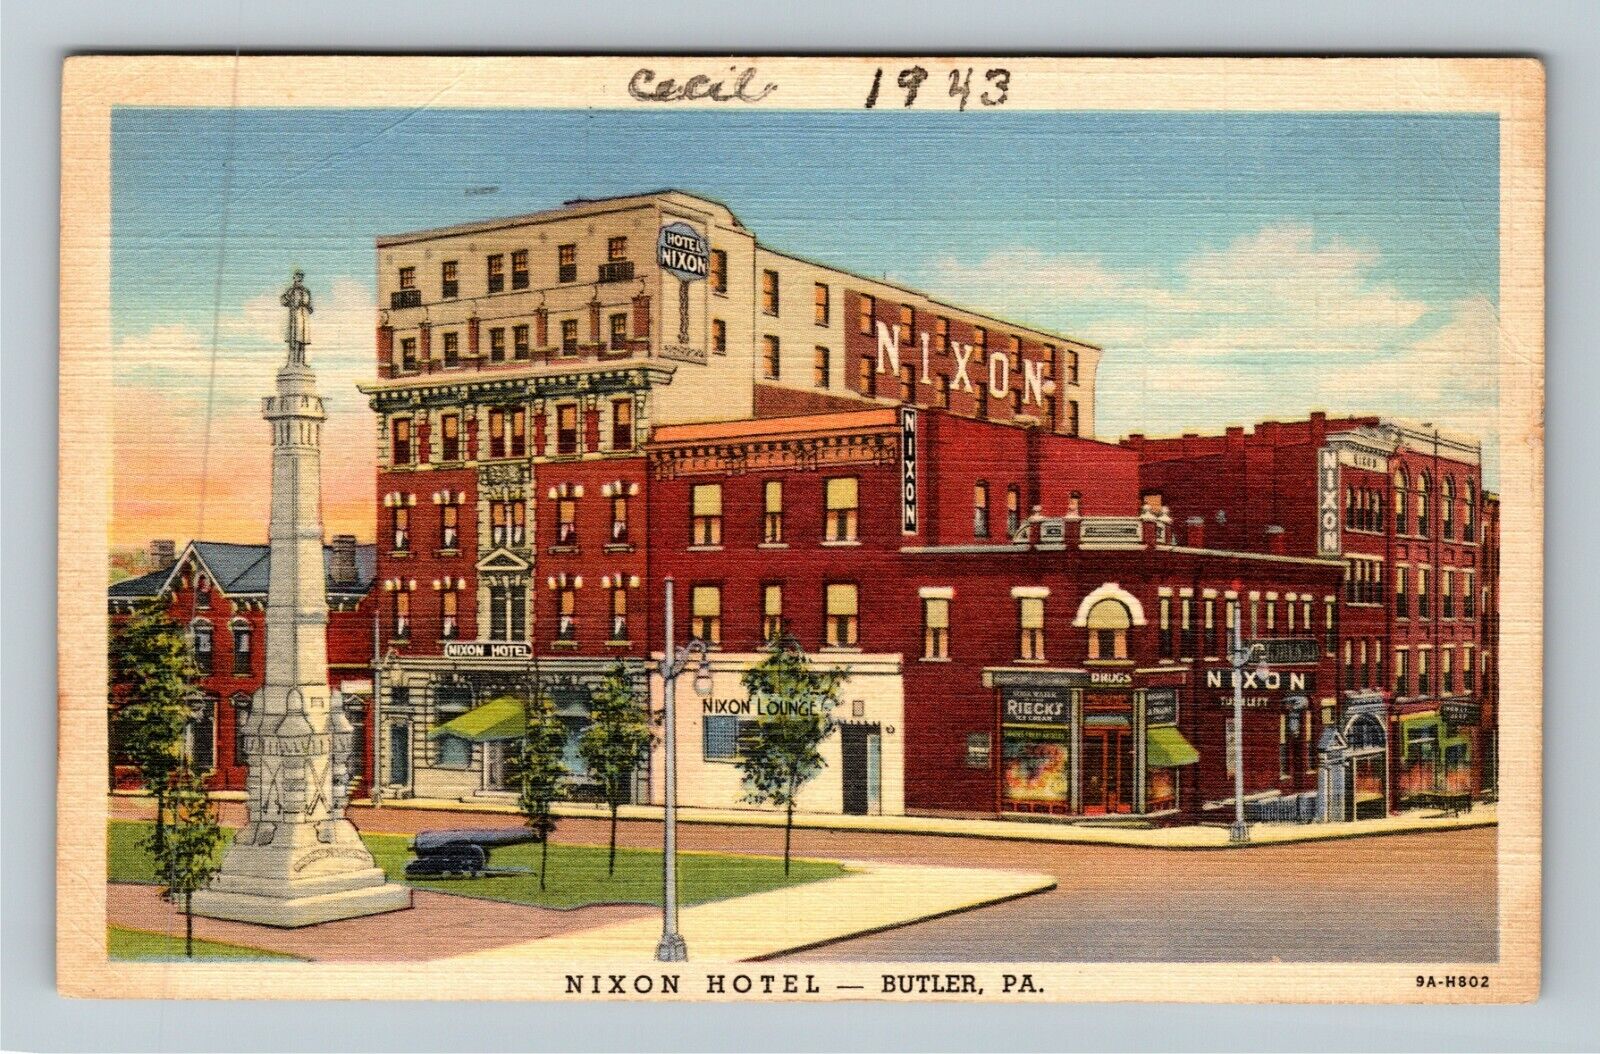 Butler PA-Pennsylvania, Nixon Hotel, c1943 Vintage Postcard